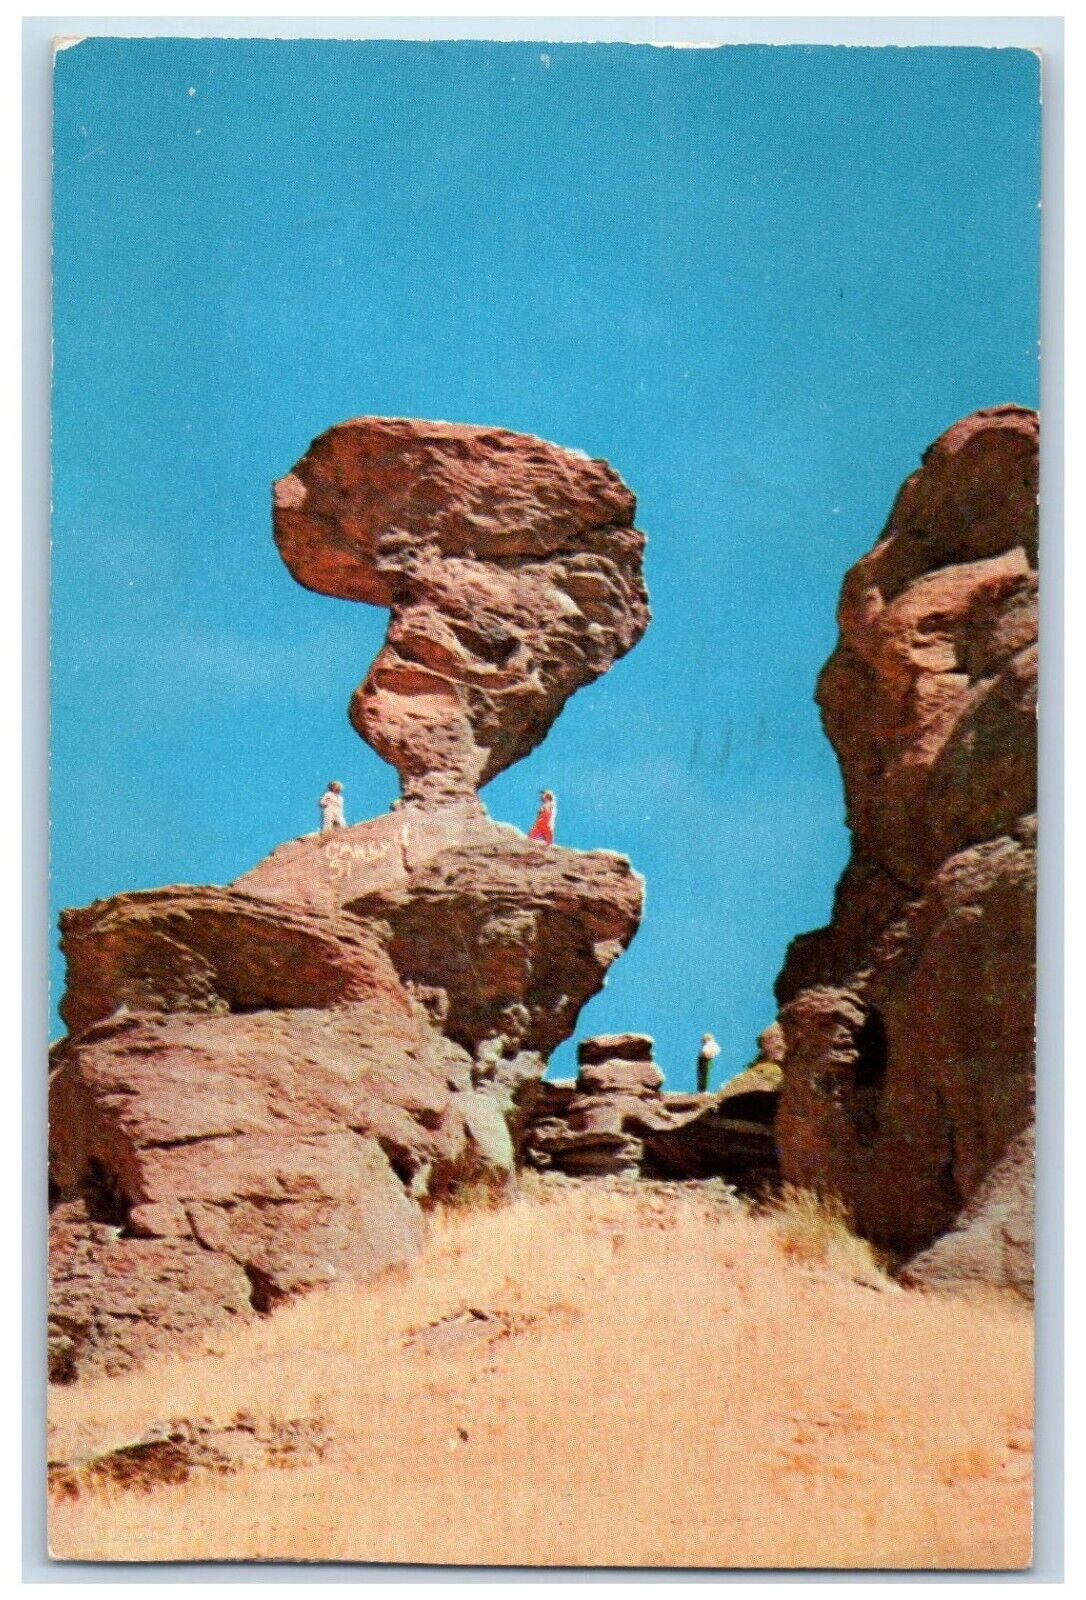 Buhl Idaho Postcard Balance Rock Castleford Natural Rock Formation 1955 Vintage